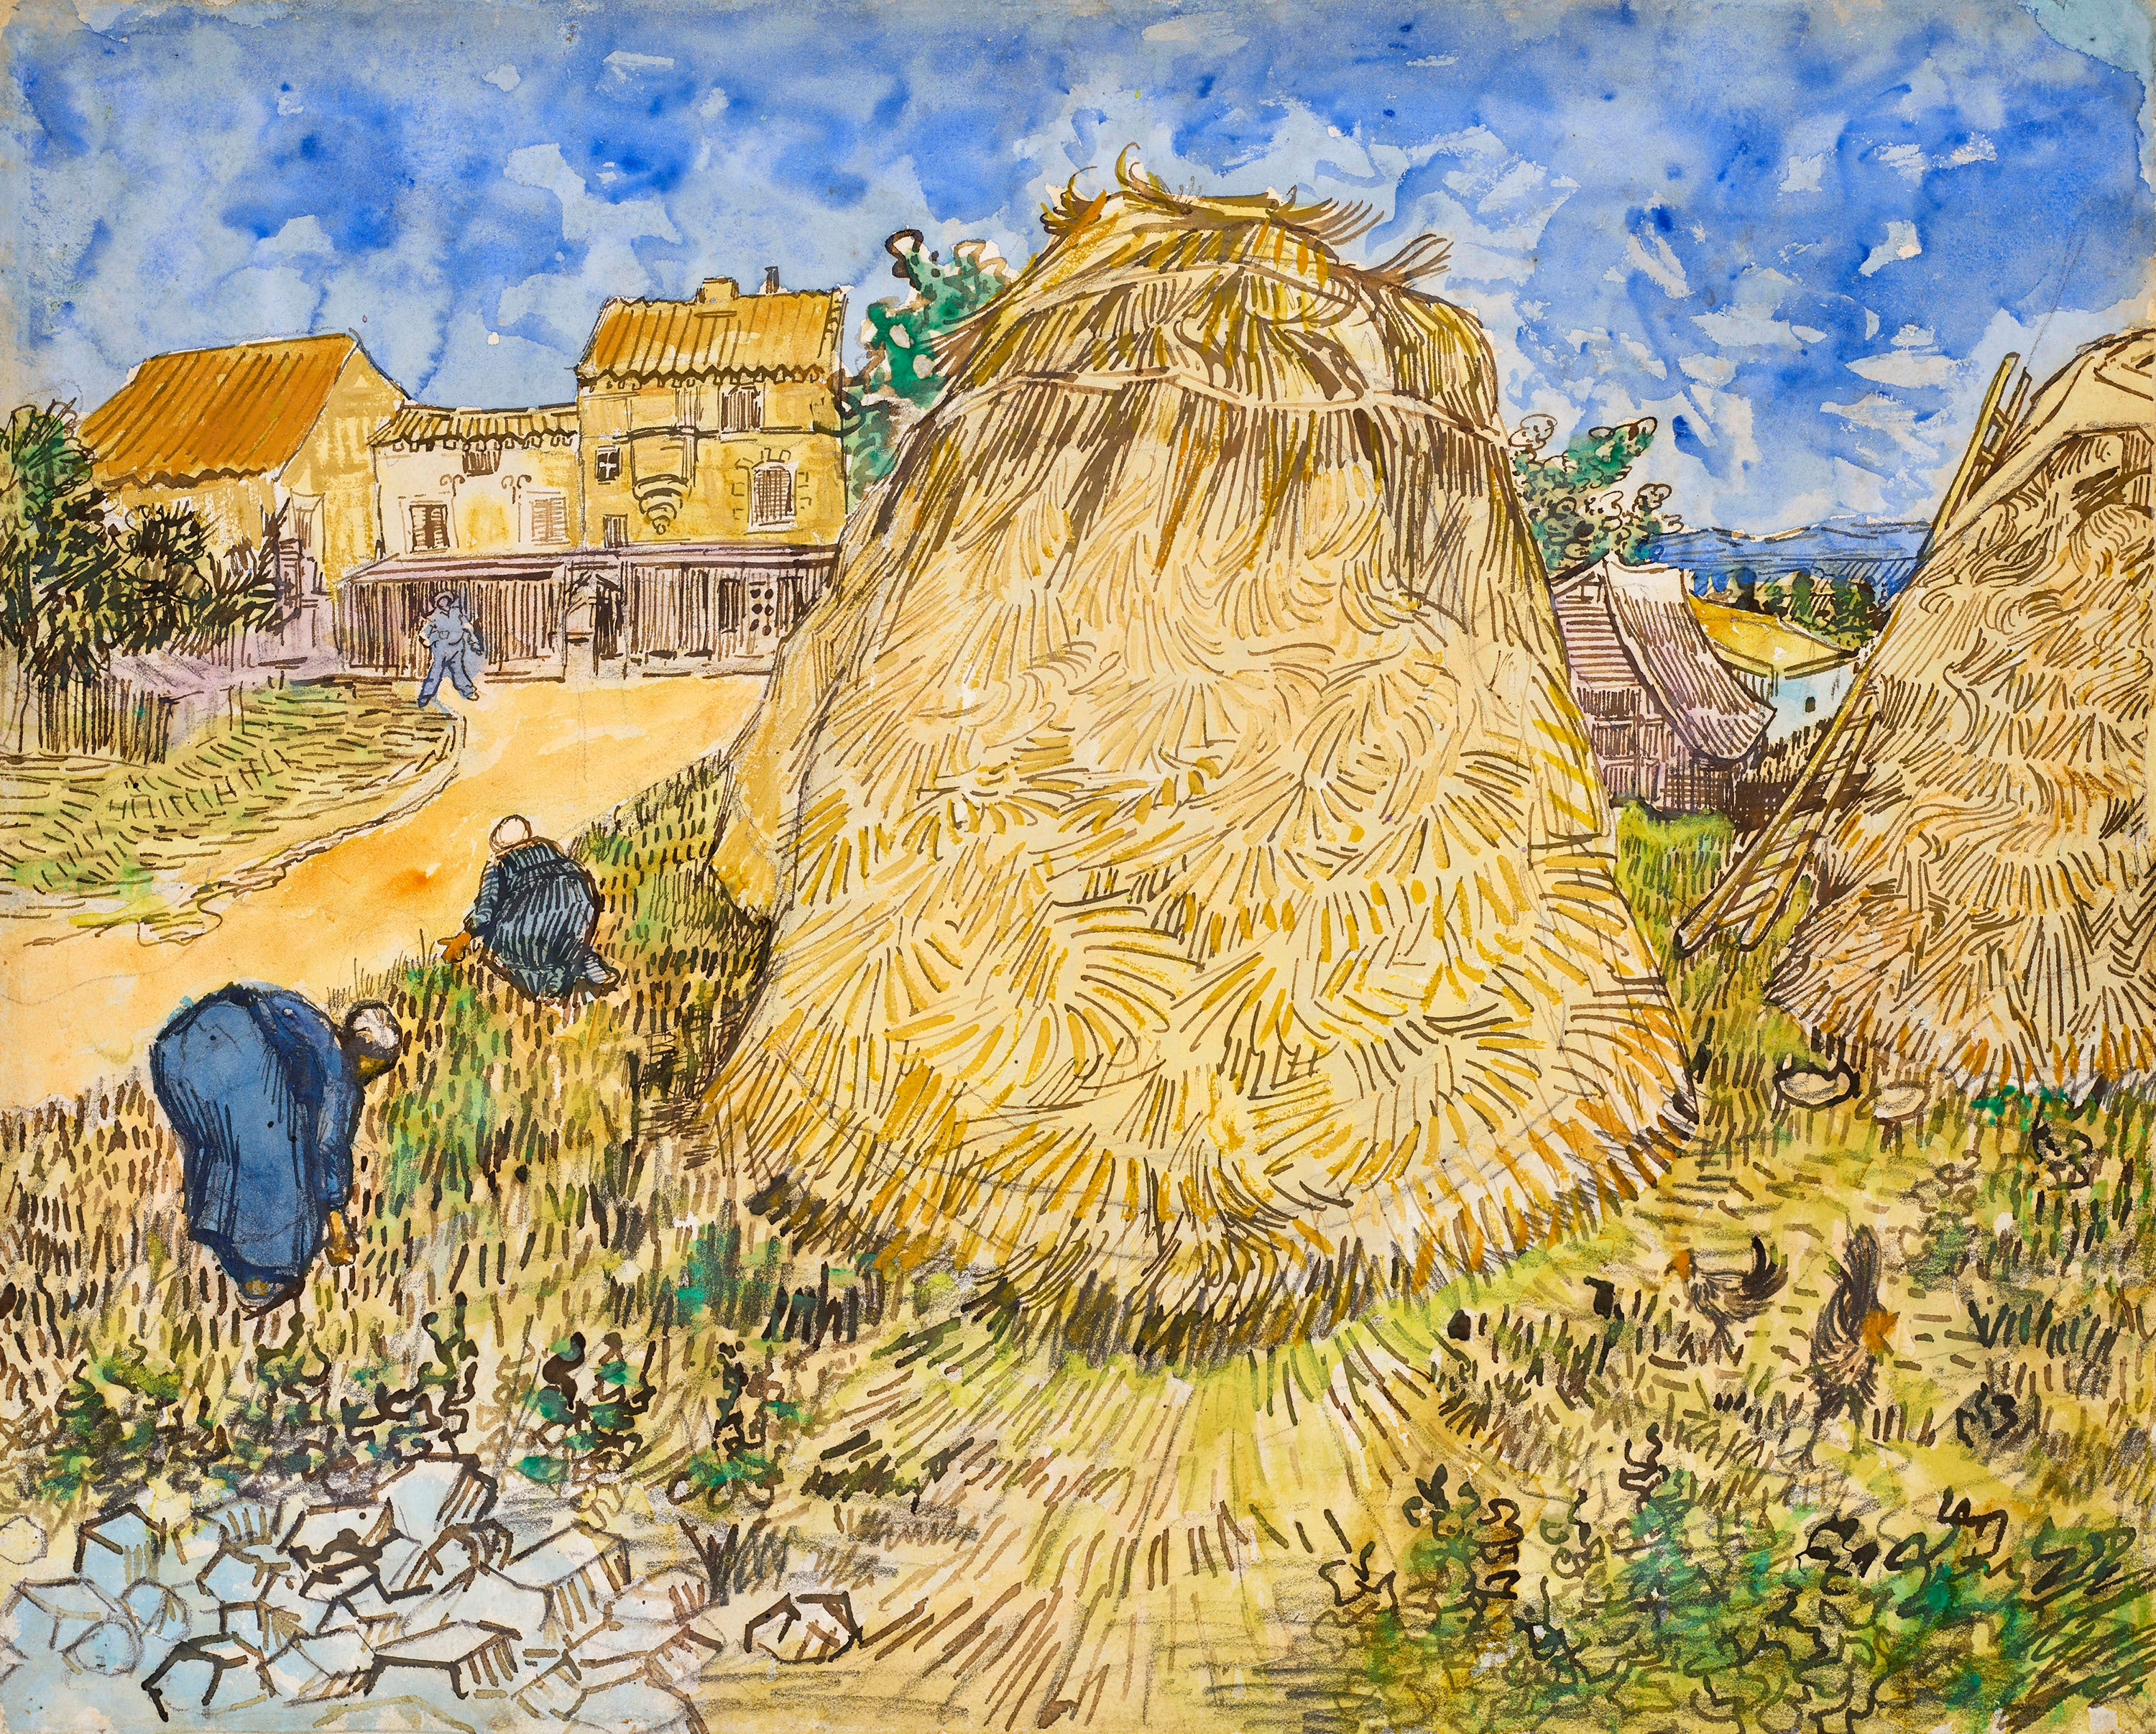 “Mueles de ble” depicts a haystack in Arles